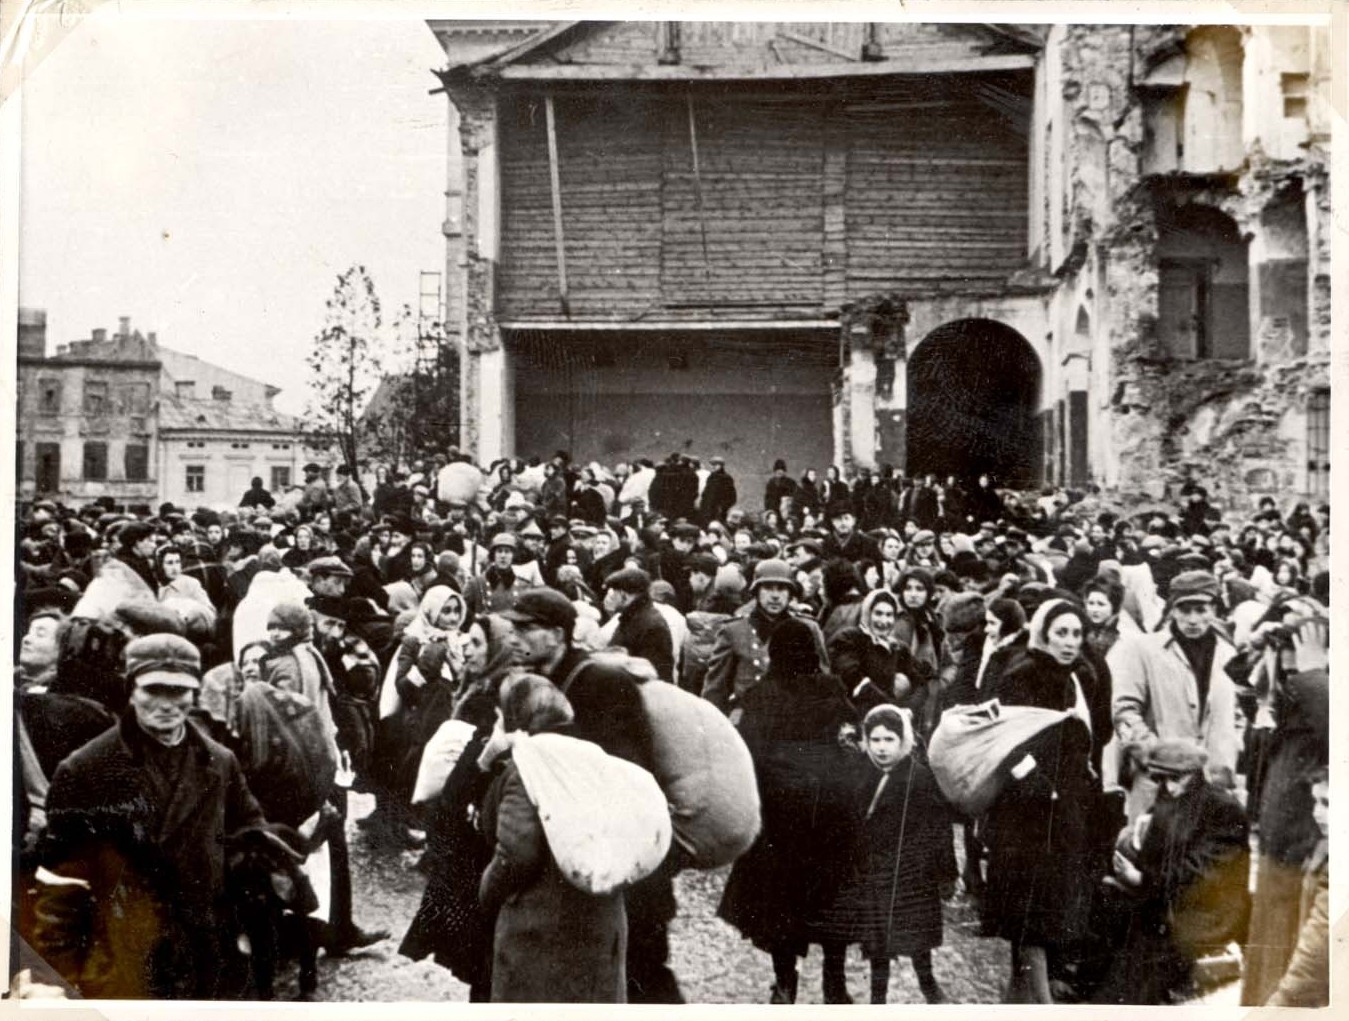 Lublin | Enciclopedia del Holocausto, Yad Vashem